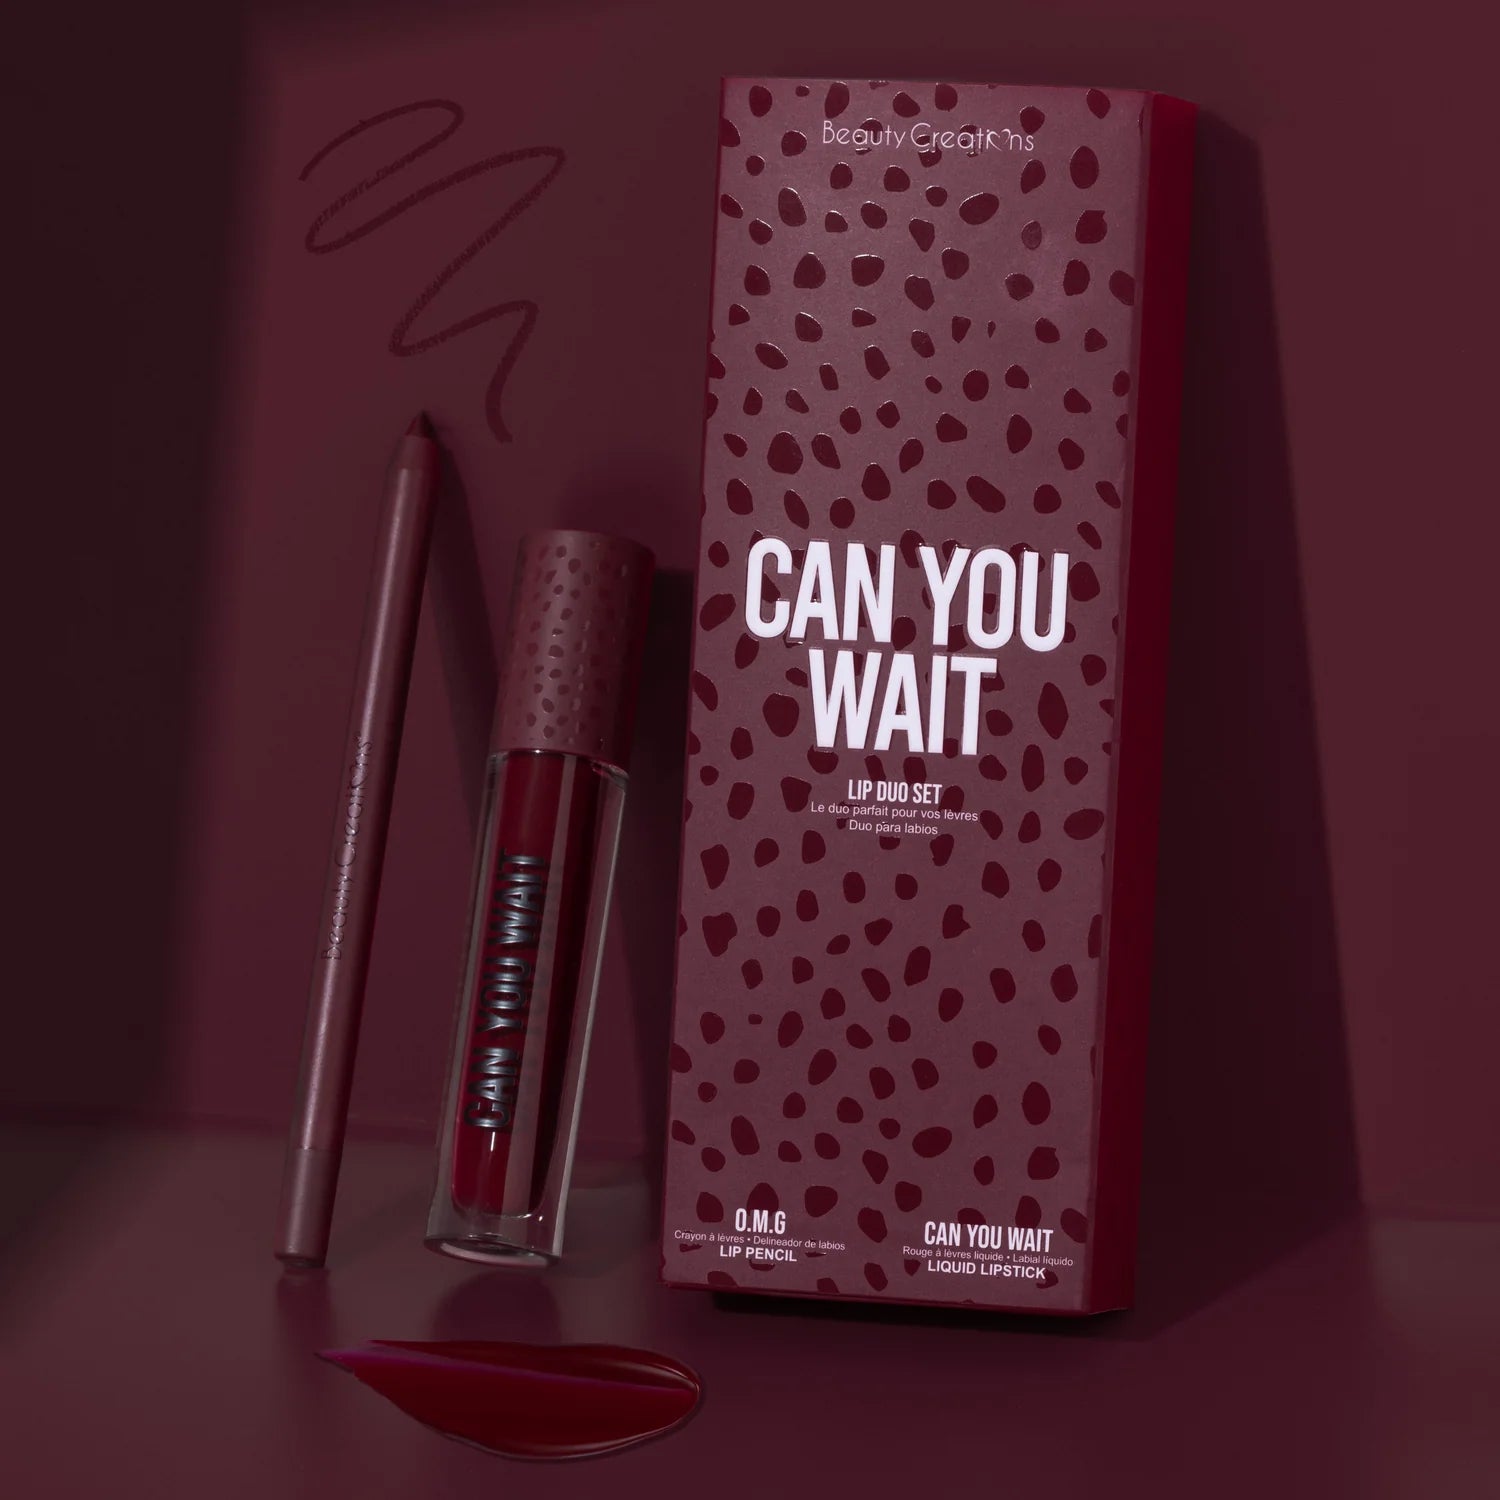 Beauty Creations - Availabilippy Lip Kit Can You Wait